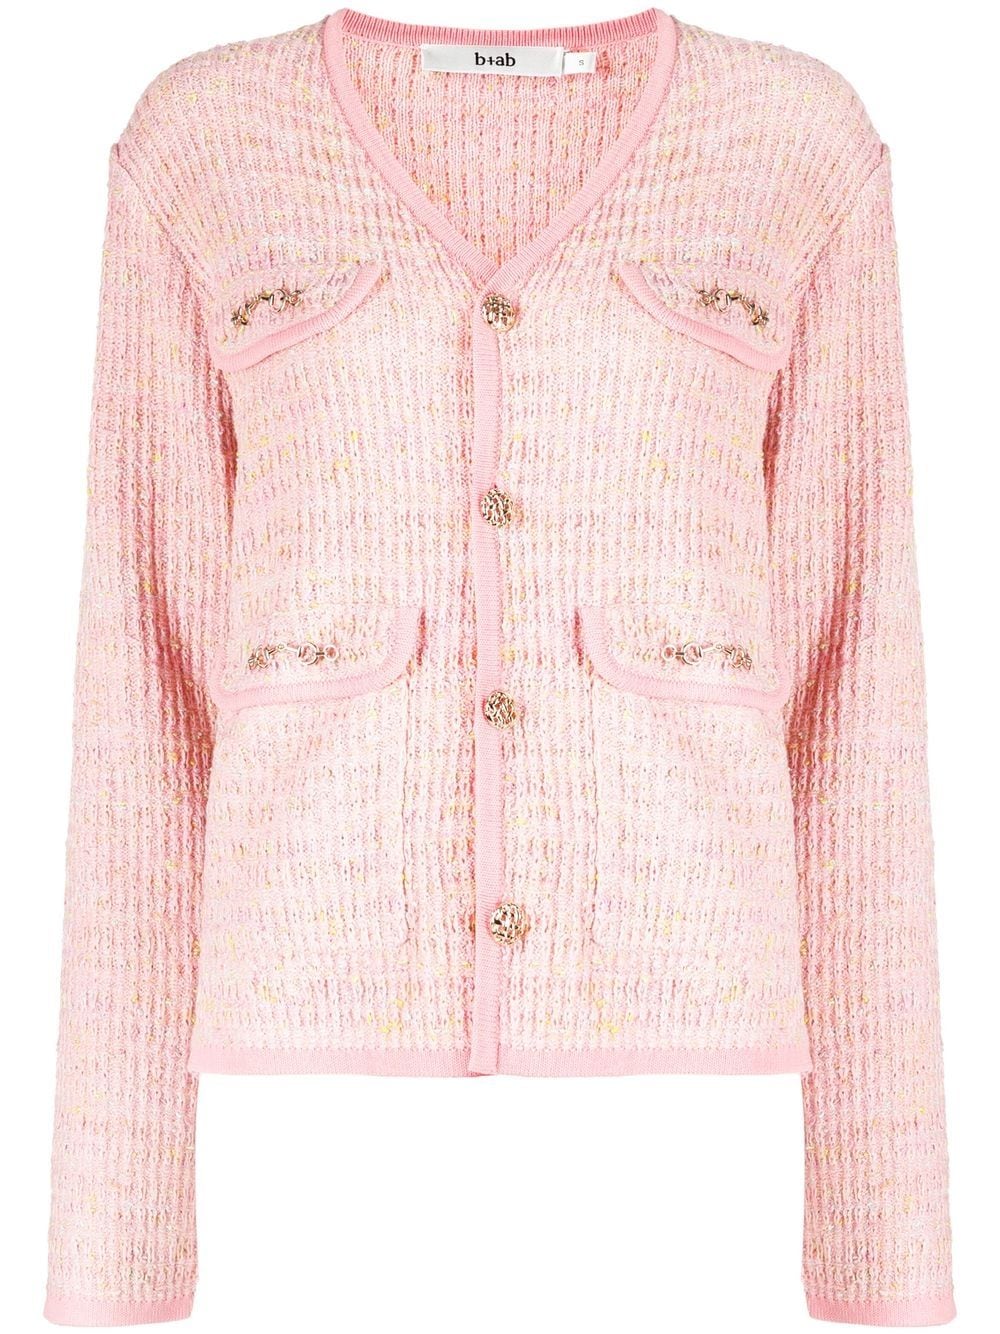 b+ab button-fastening knit cardigan - Pink